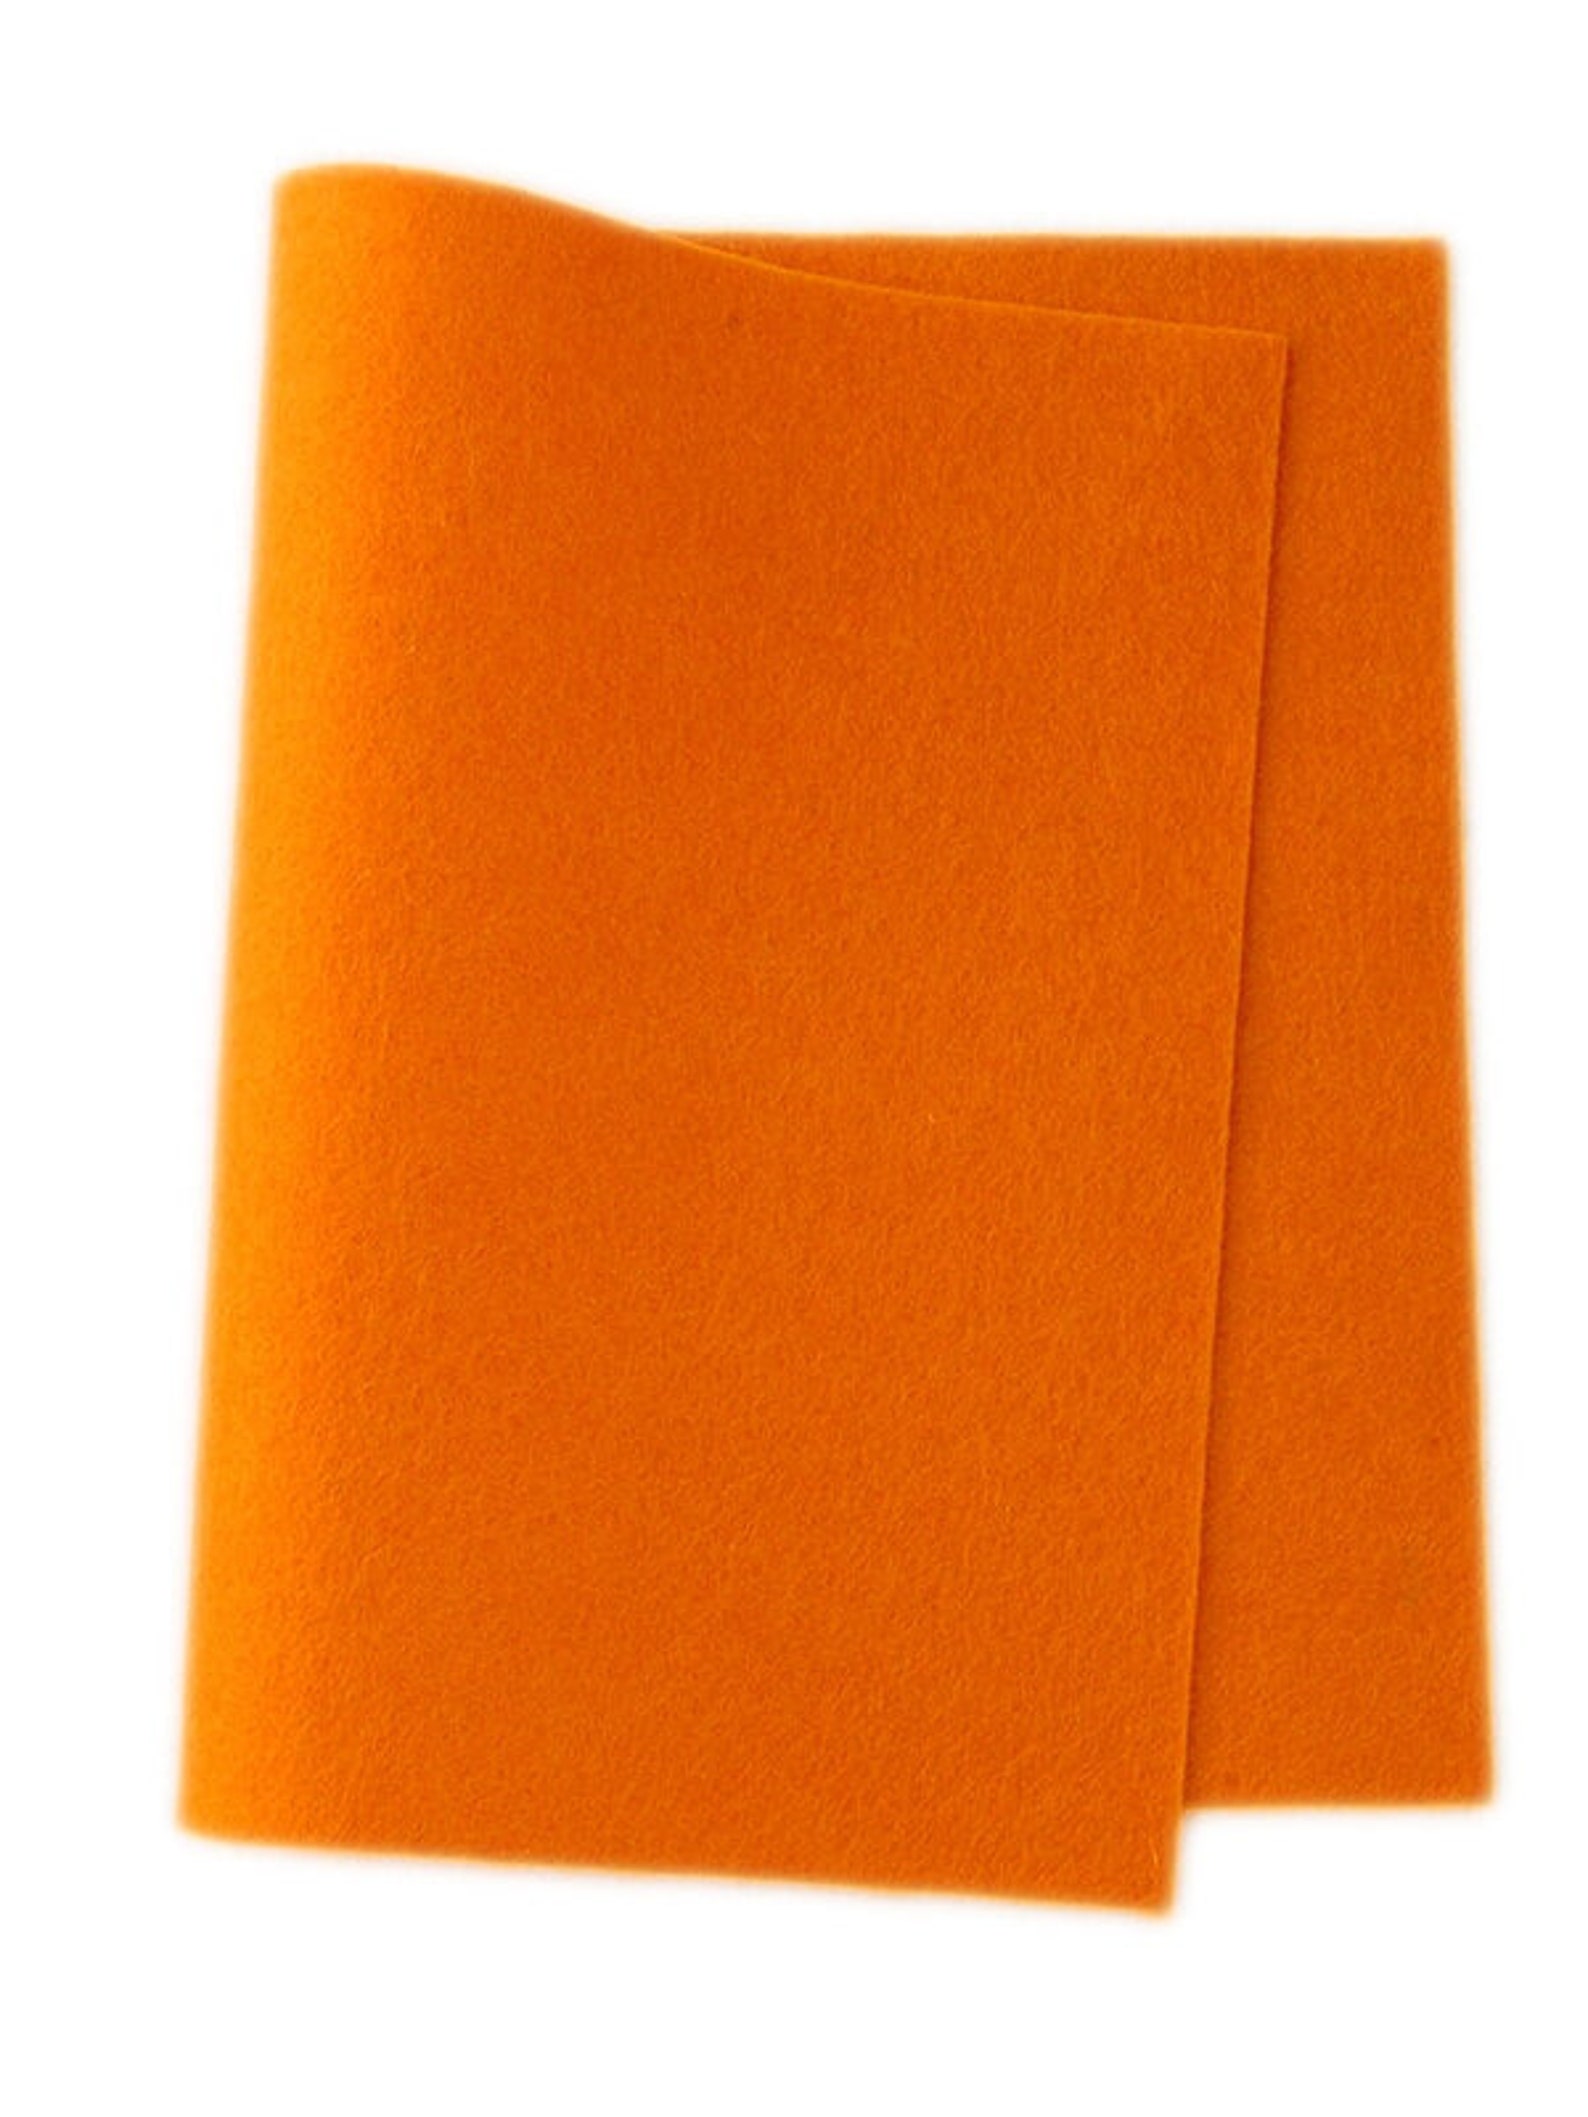 Wool-felt Truefelt 504 Light Orange 1-12mm 200x300mm - Etsy UK